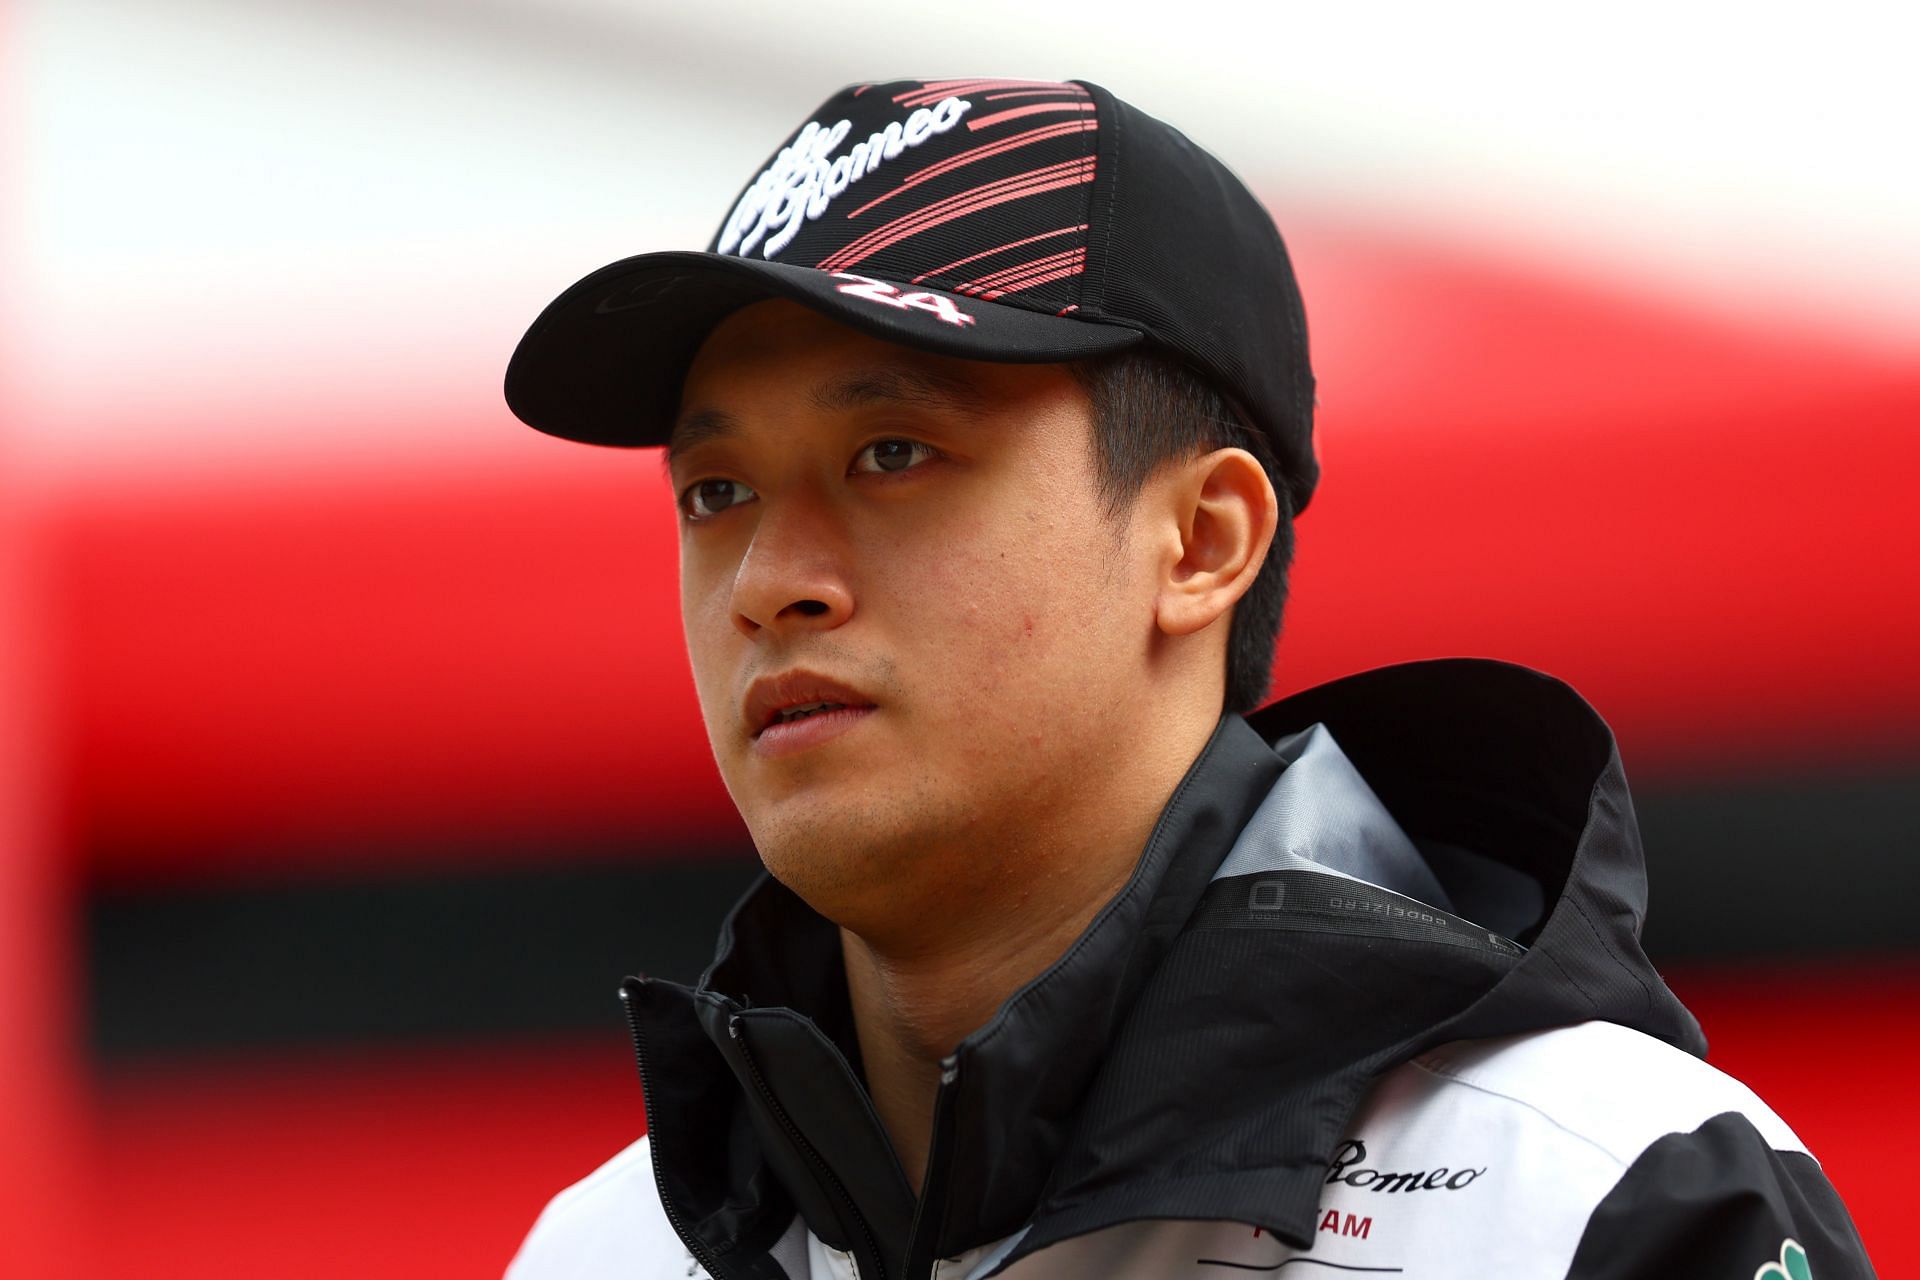 Guanyu Zhou suffered a horrible crash at the start of the 2022 F1 British GP